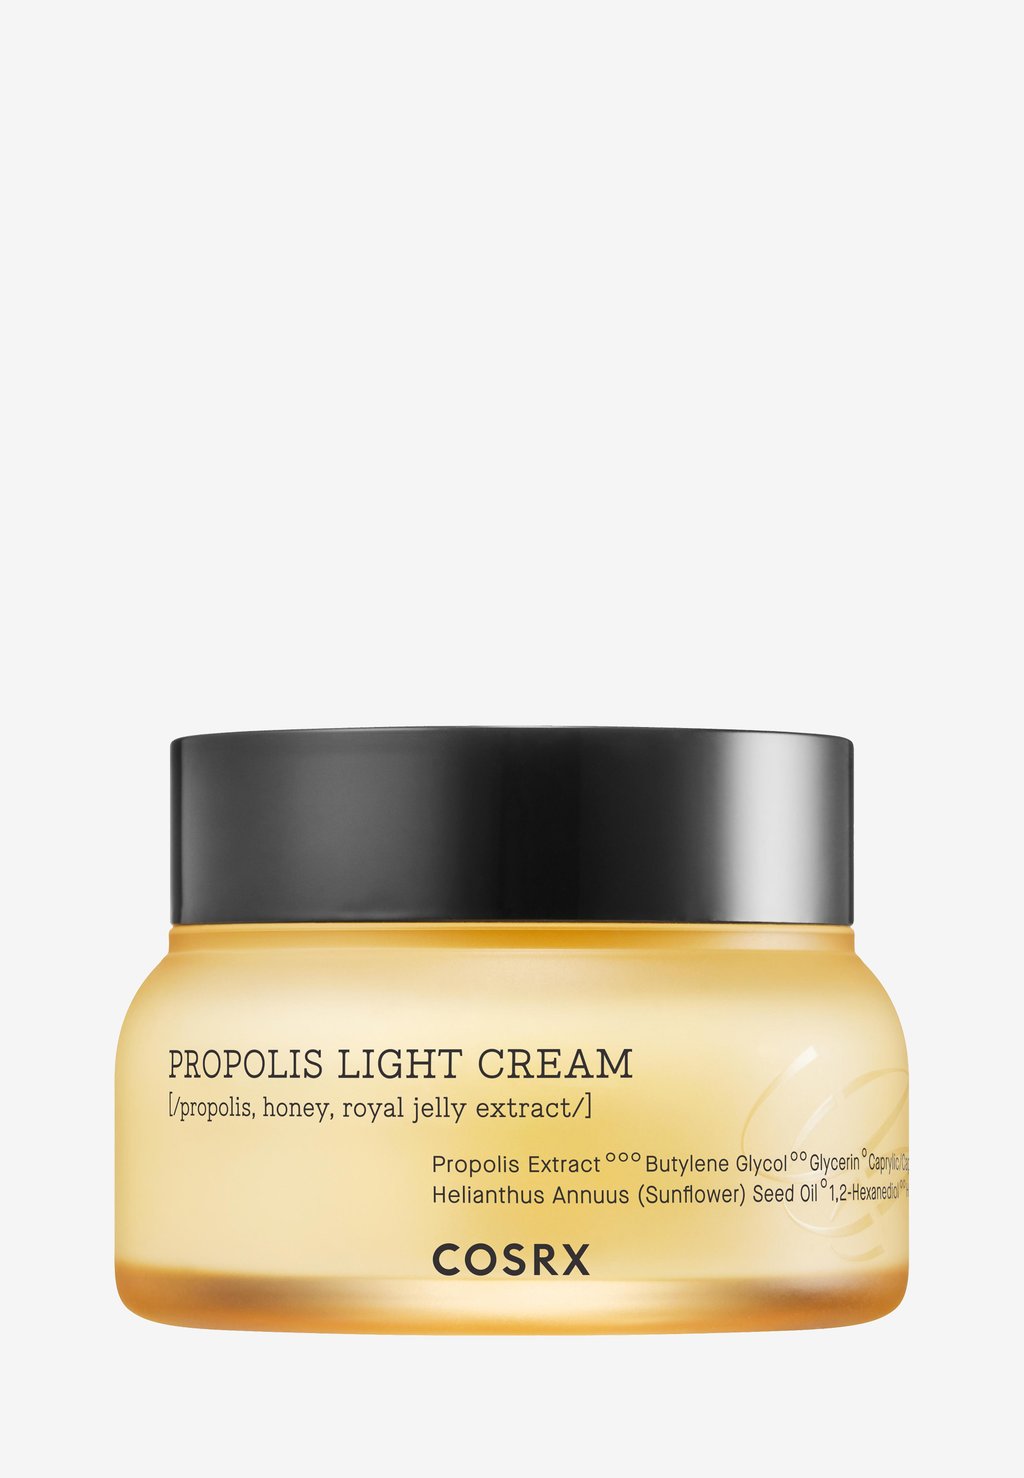 Дневной крем Full Fit Propolis Light Cream COSRX cosrx full fit propolis light cream